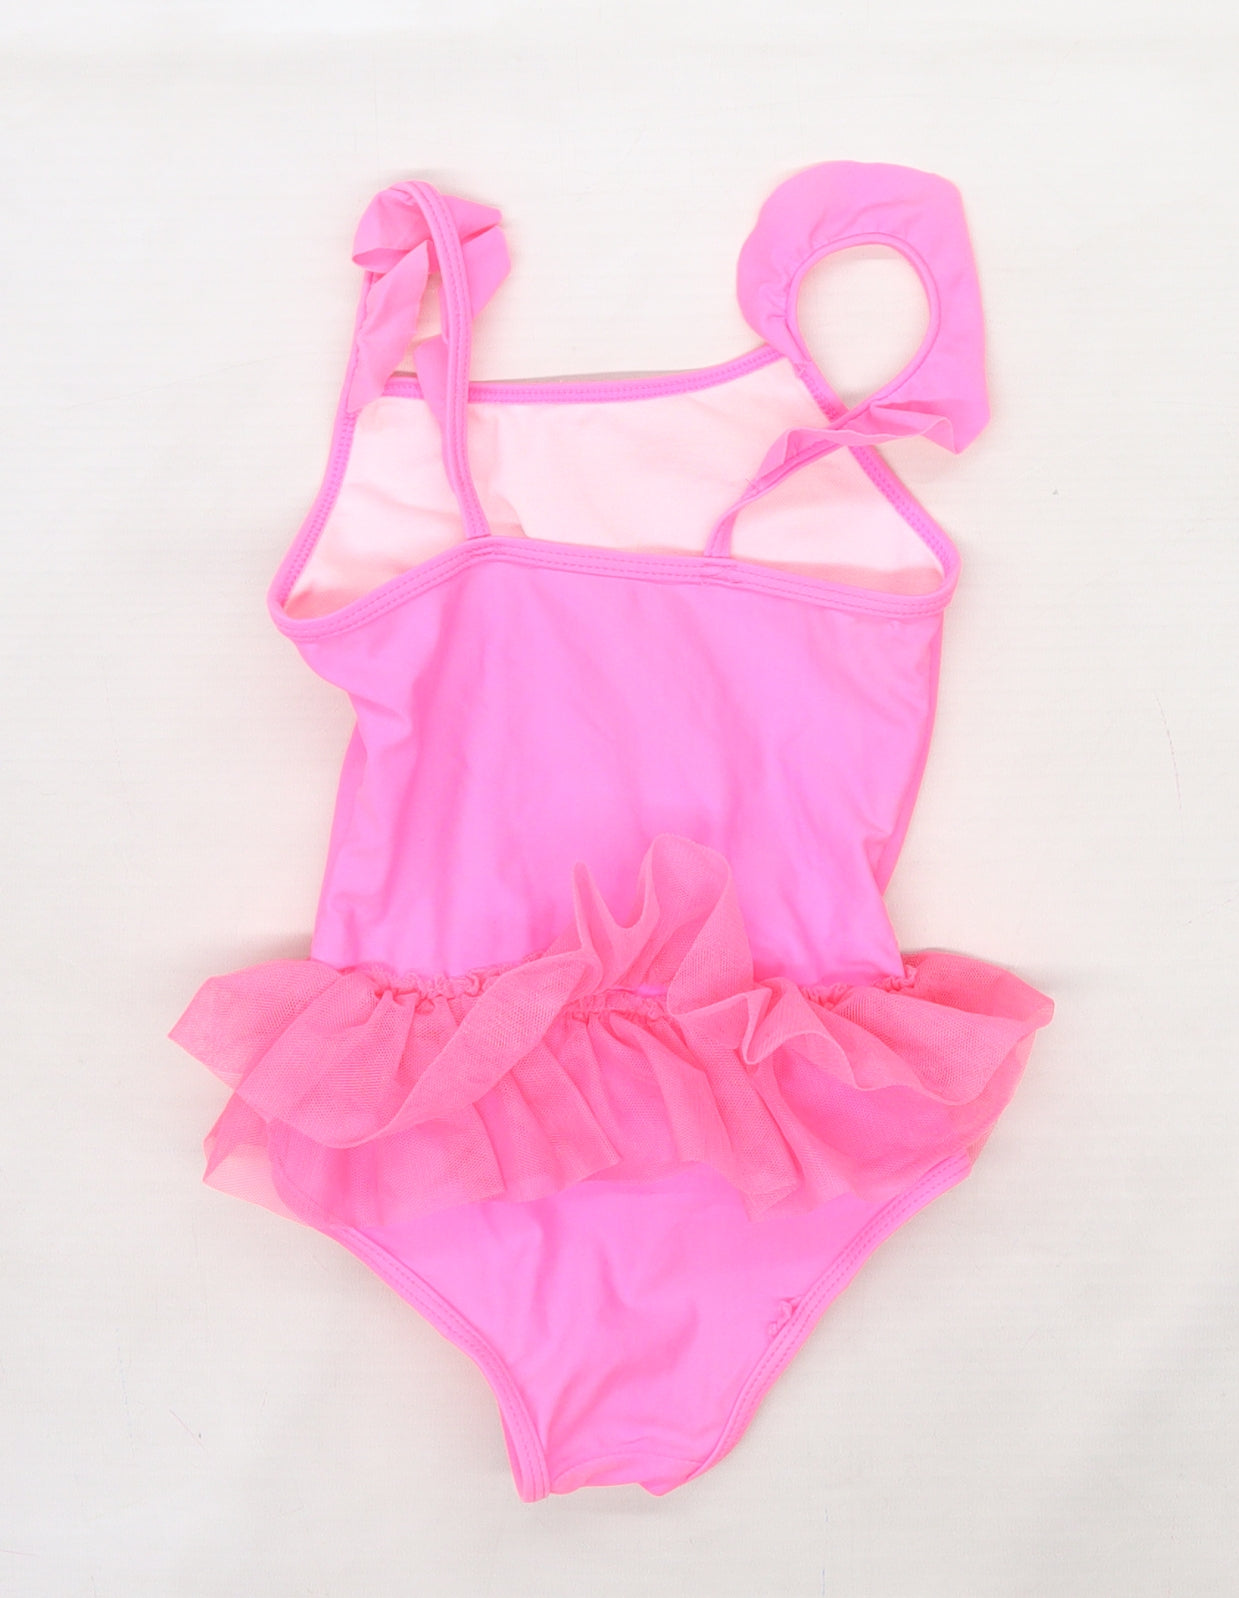 Primark Girls Pink   Unitard Outfit/Set Size 24 Months  - Unicorn Puff Skirt Swimming Costume